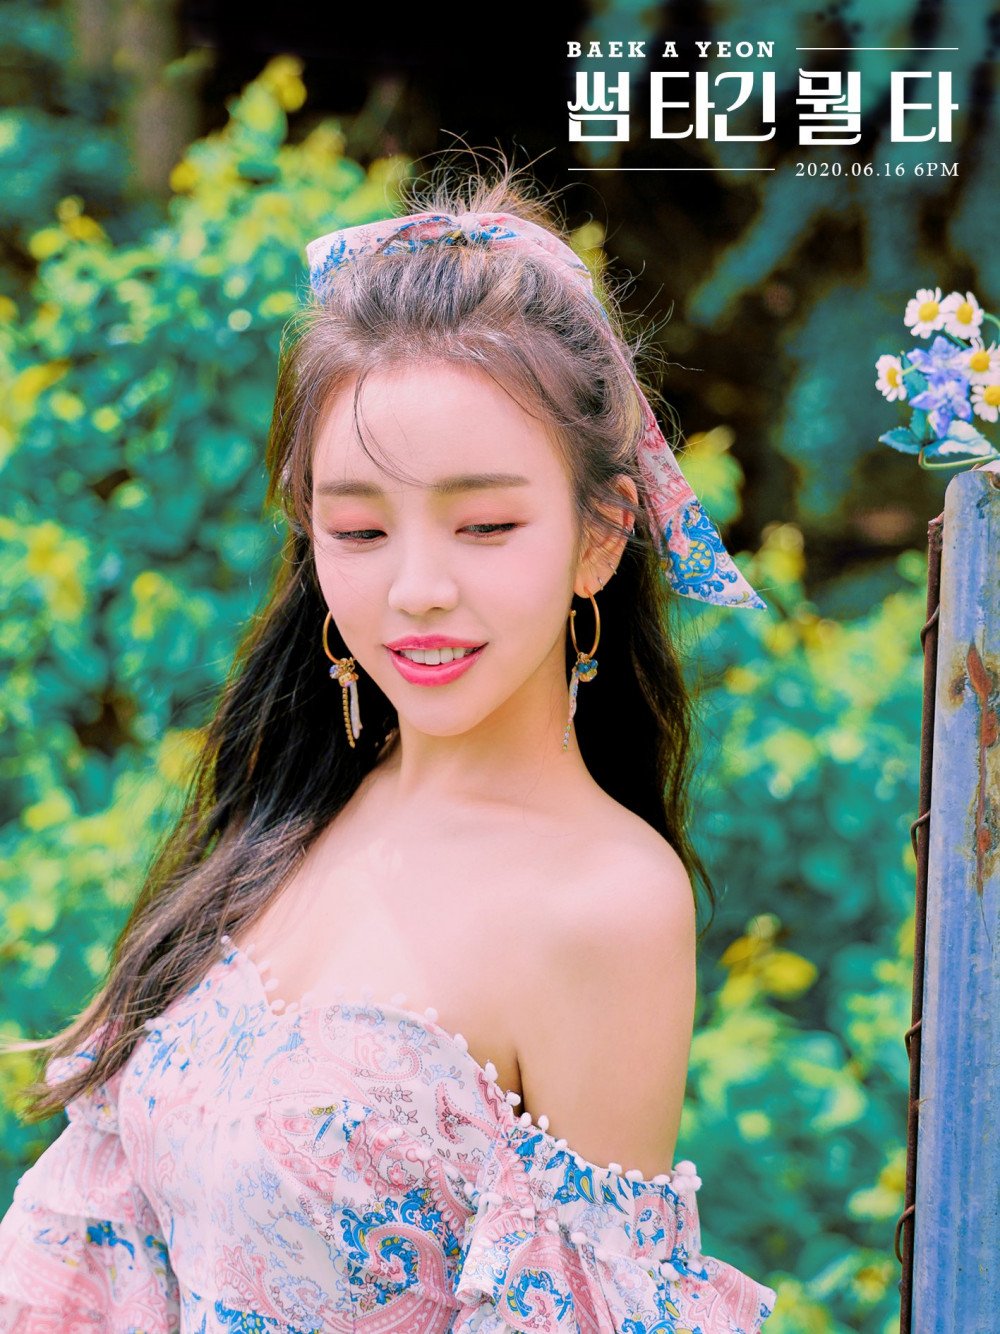 baek-ah-yeon-reveals-summer-teaser-images-for-4th-digital-single-1